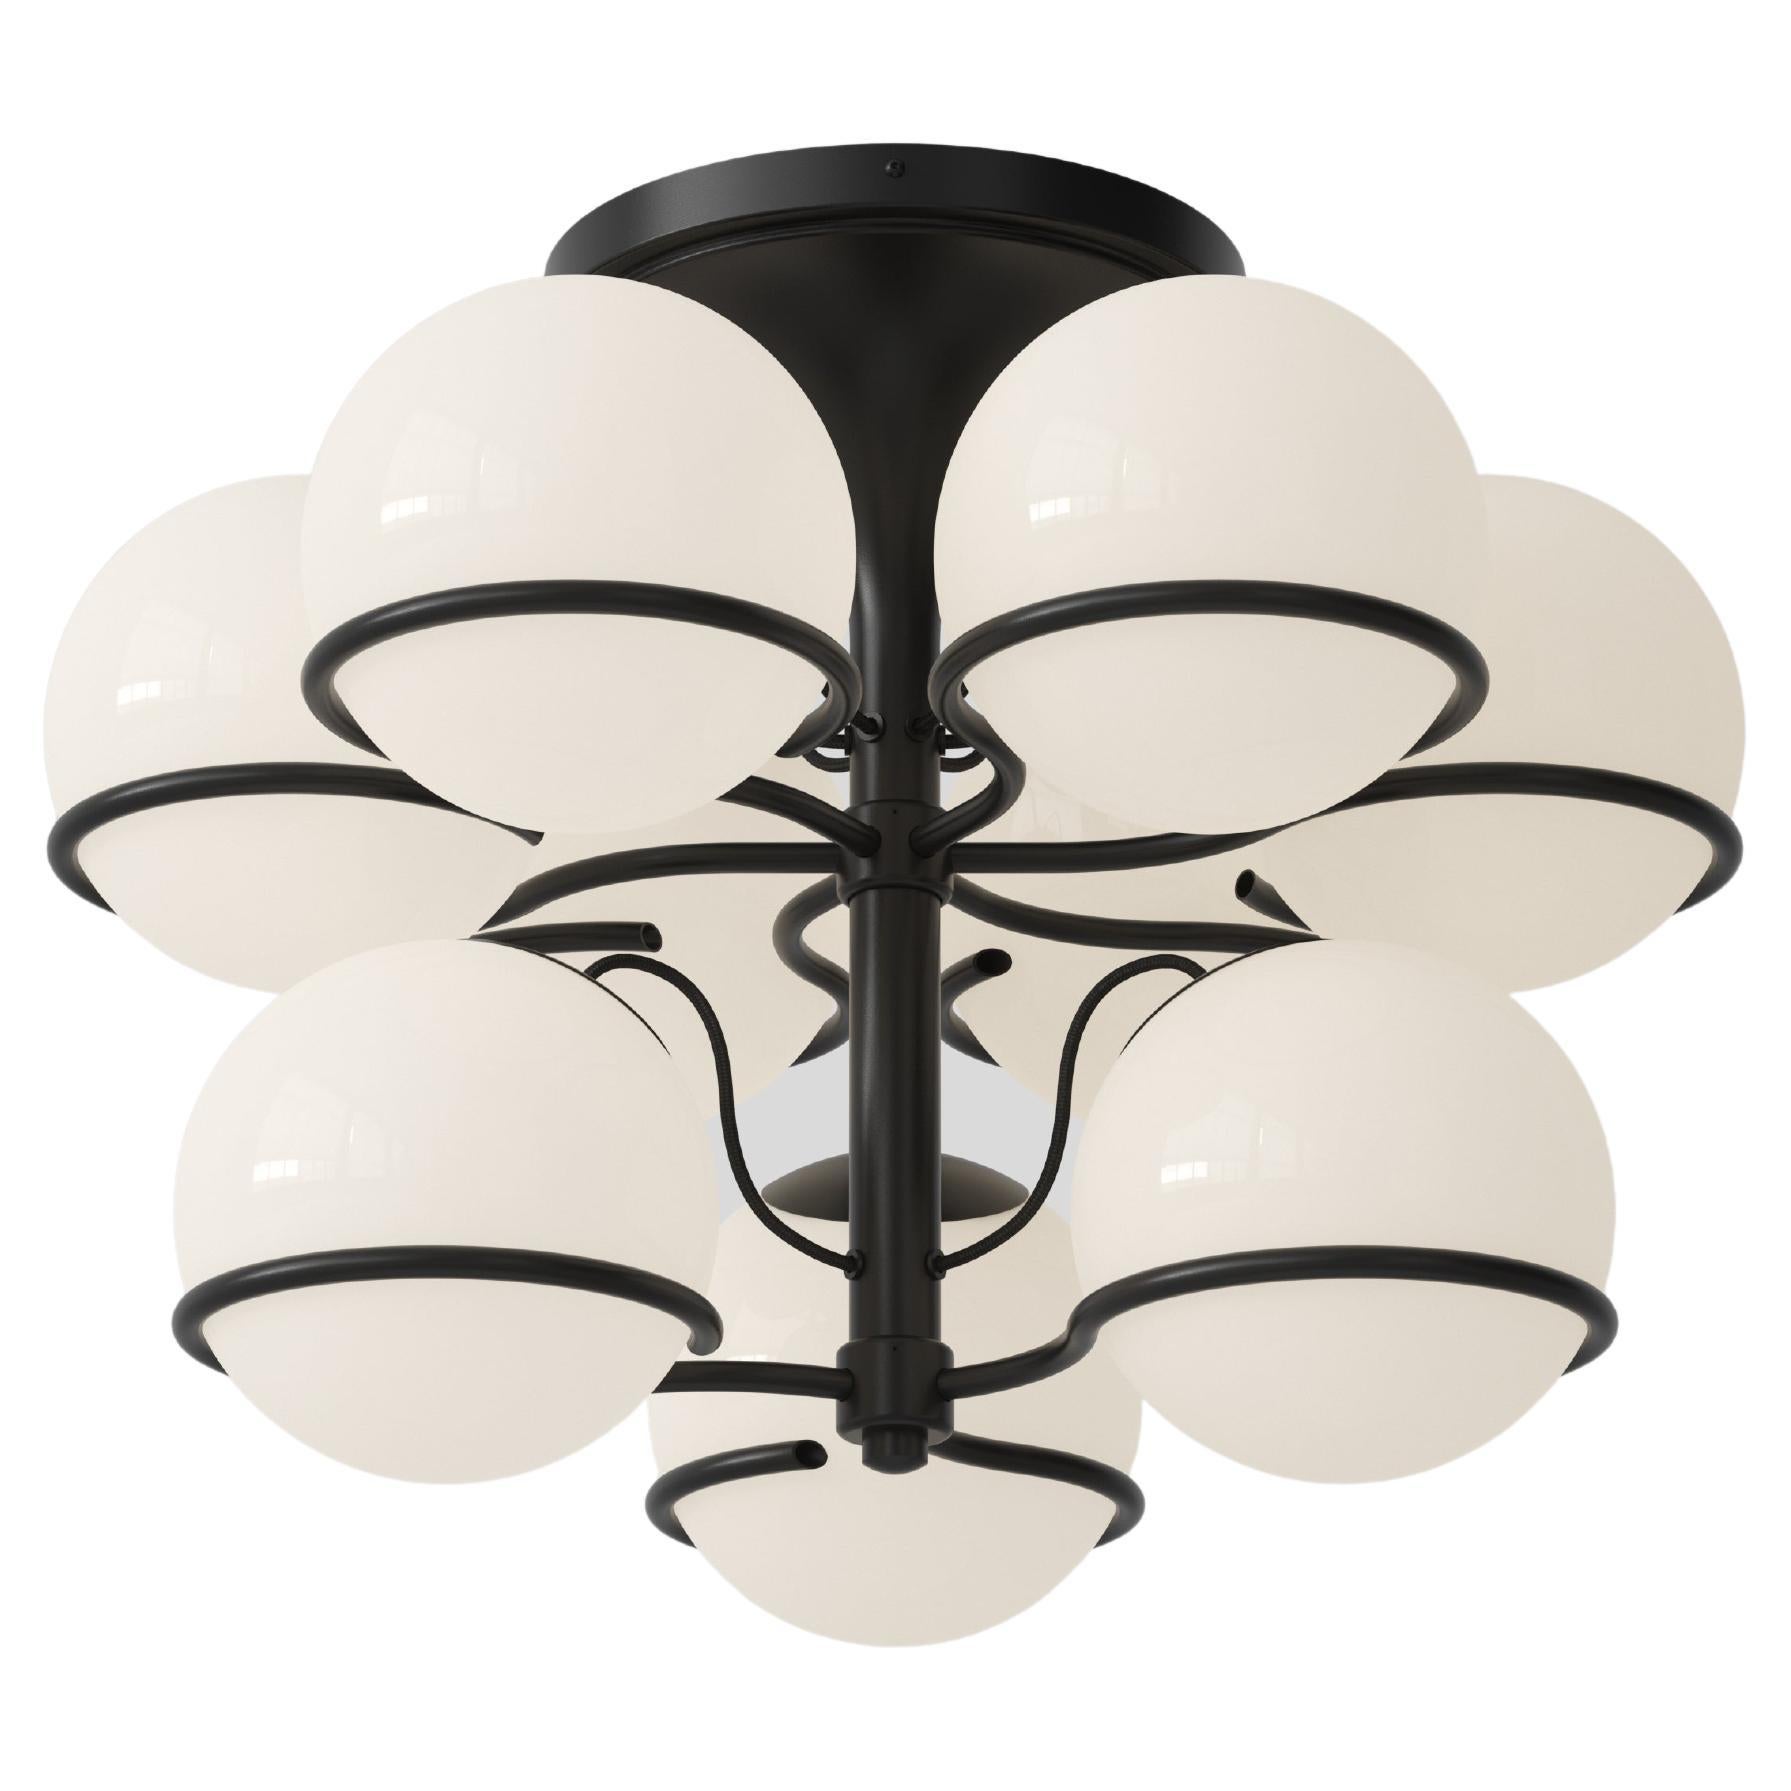 Gino Sarfatti Model 2042/9 Opaline Glass Ceiling Light in Black